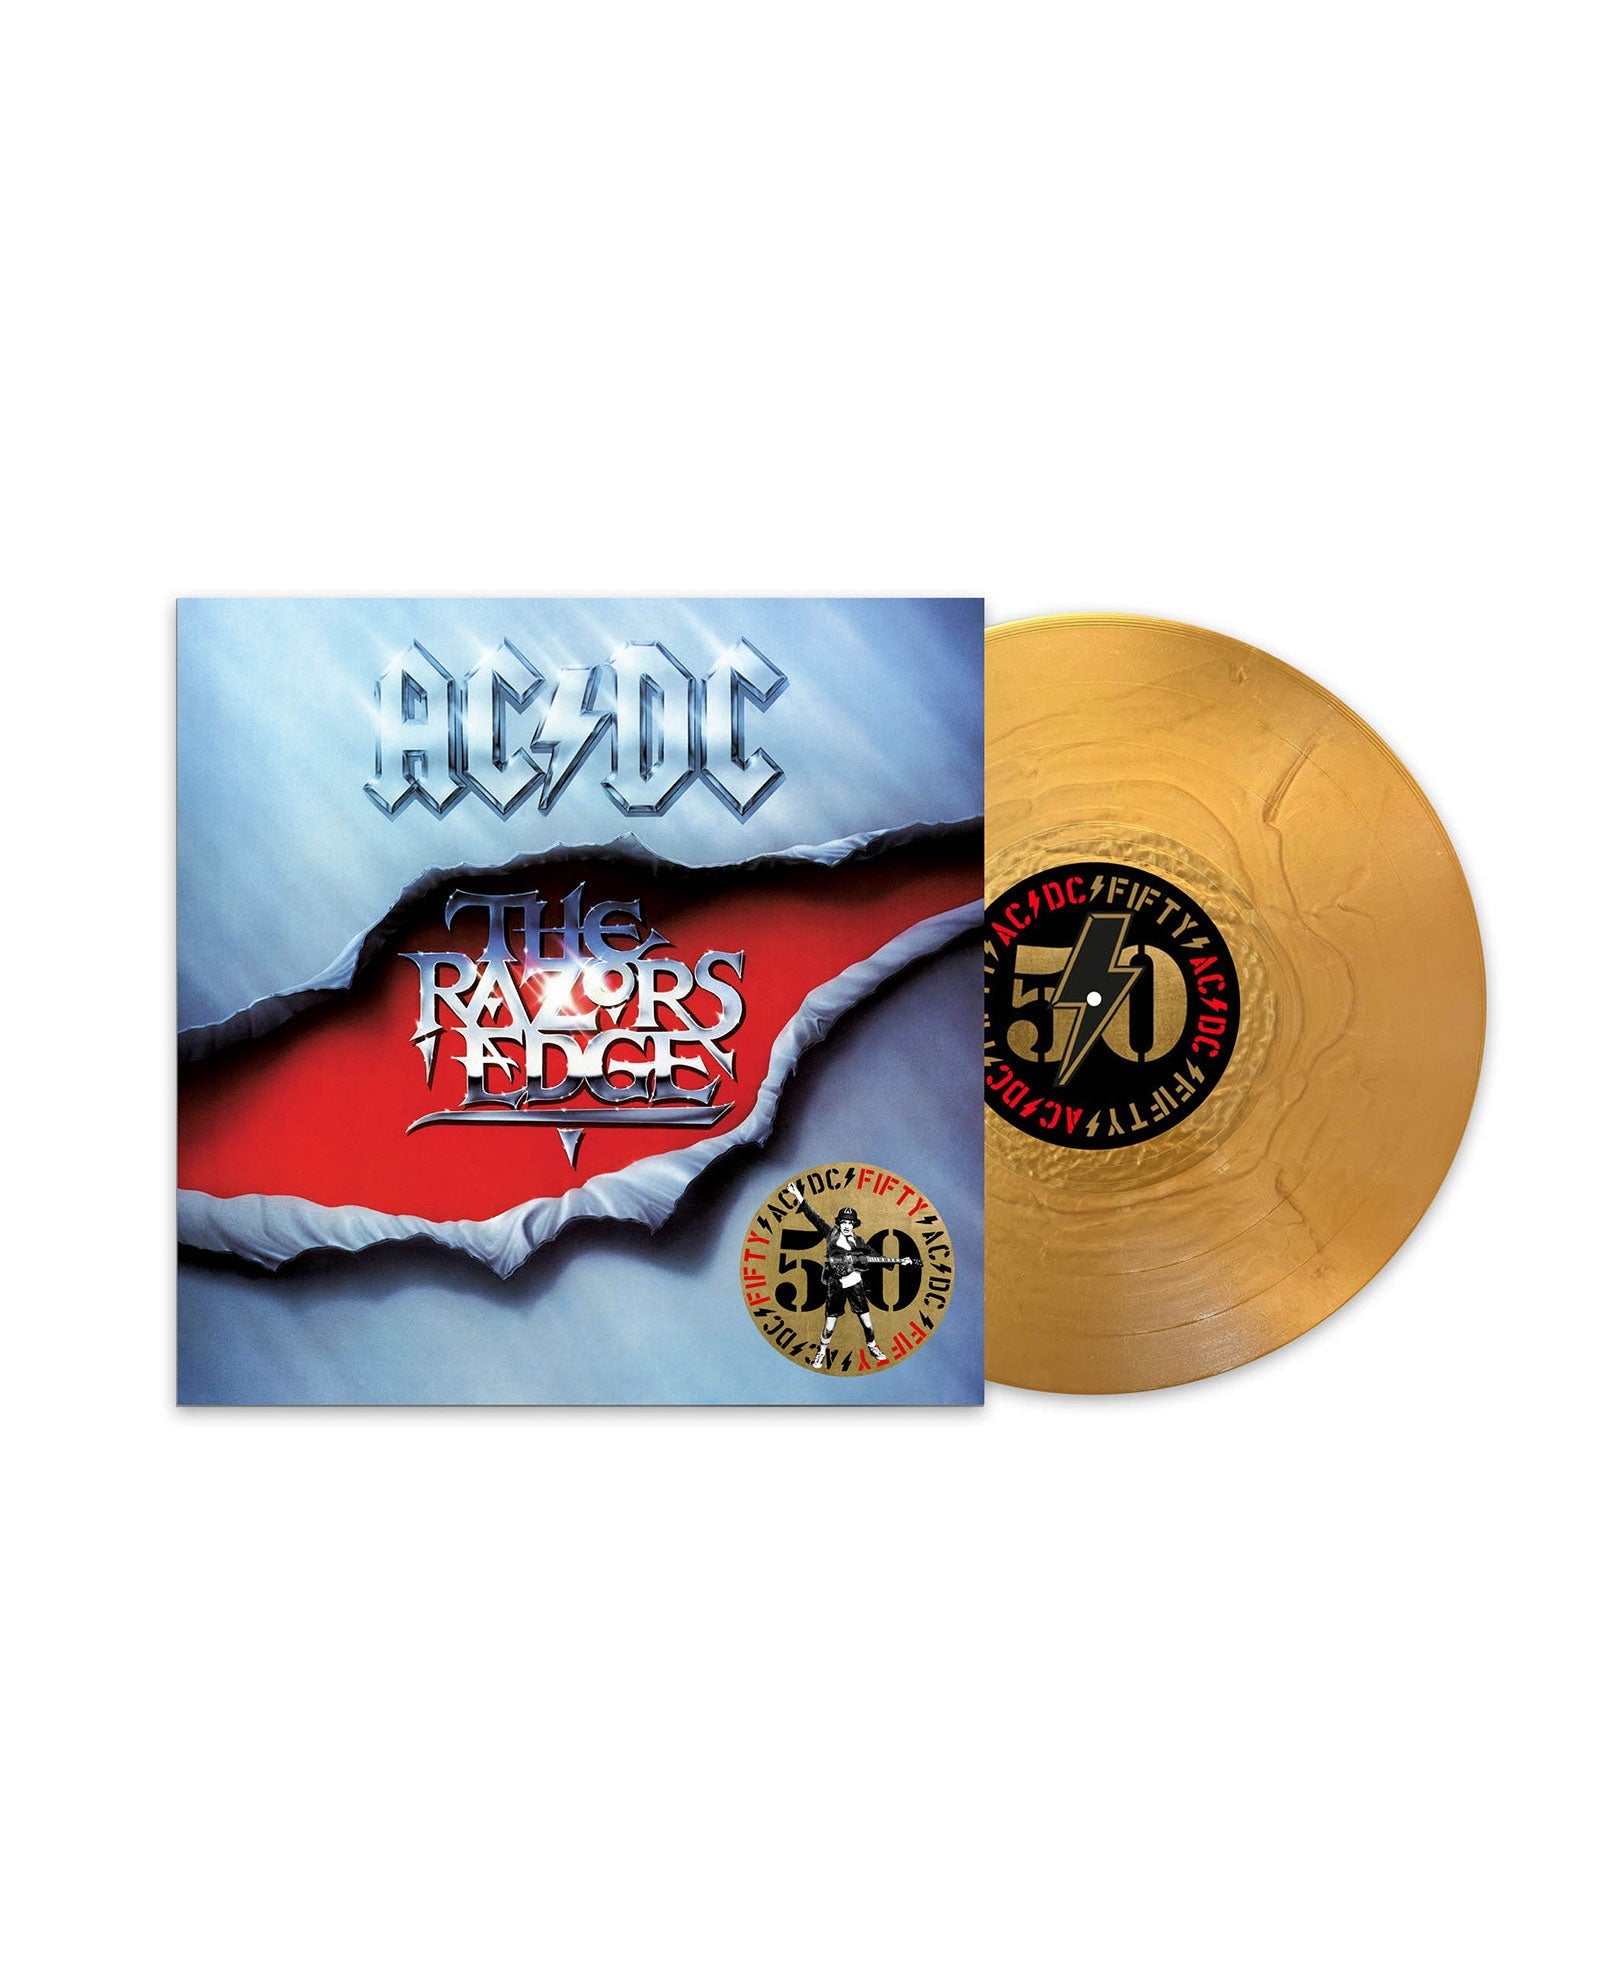 AC/DC - LP Vinilo Dorado "The Razors Edge" Ed. 50 aniversario - D2fy · Rocktud - Rocktud